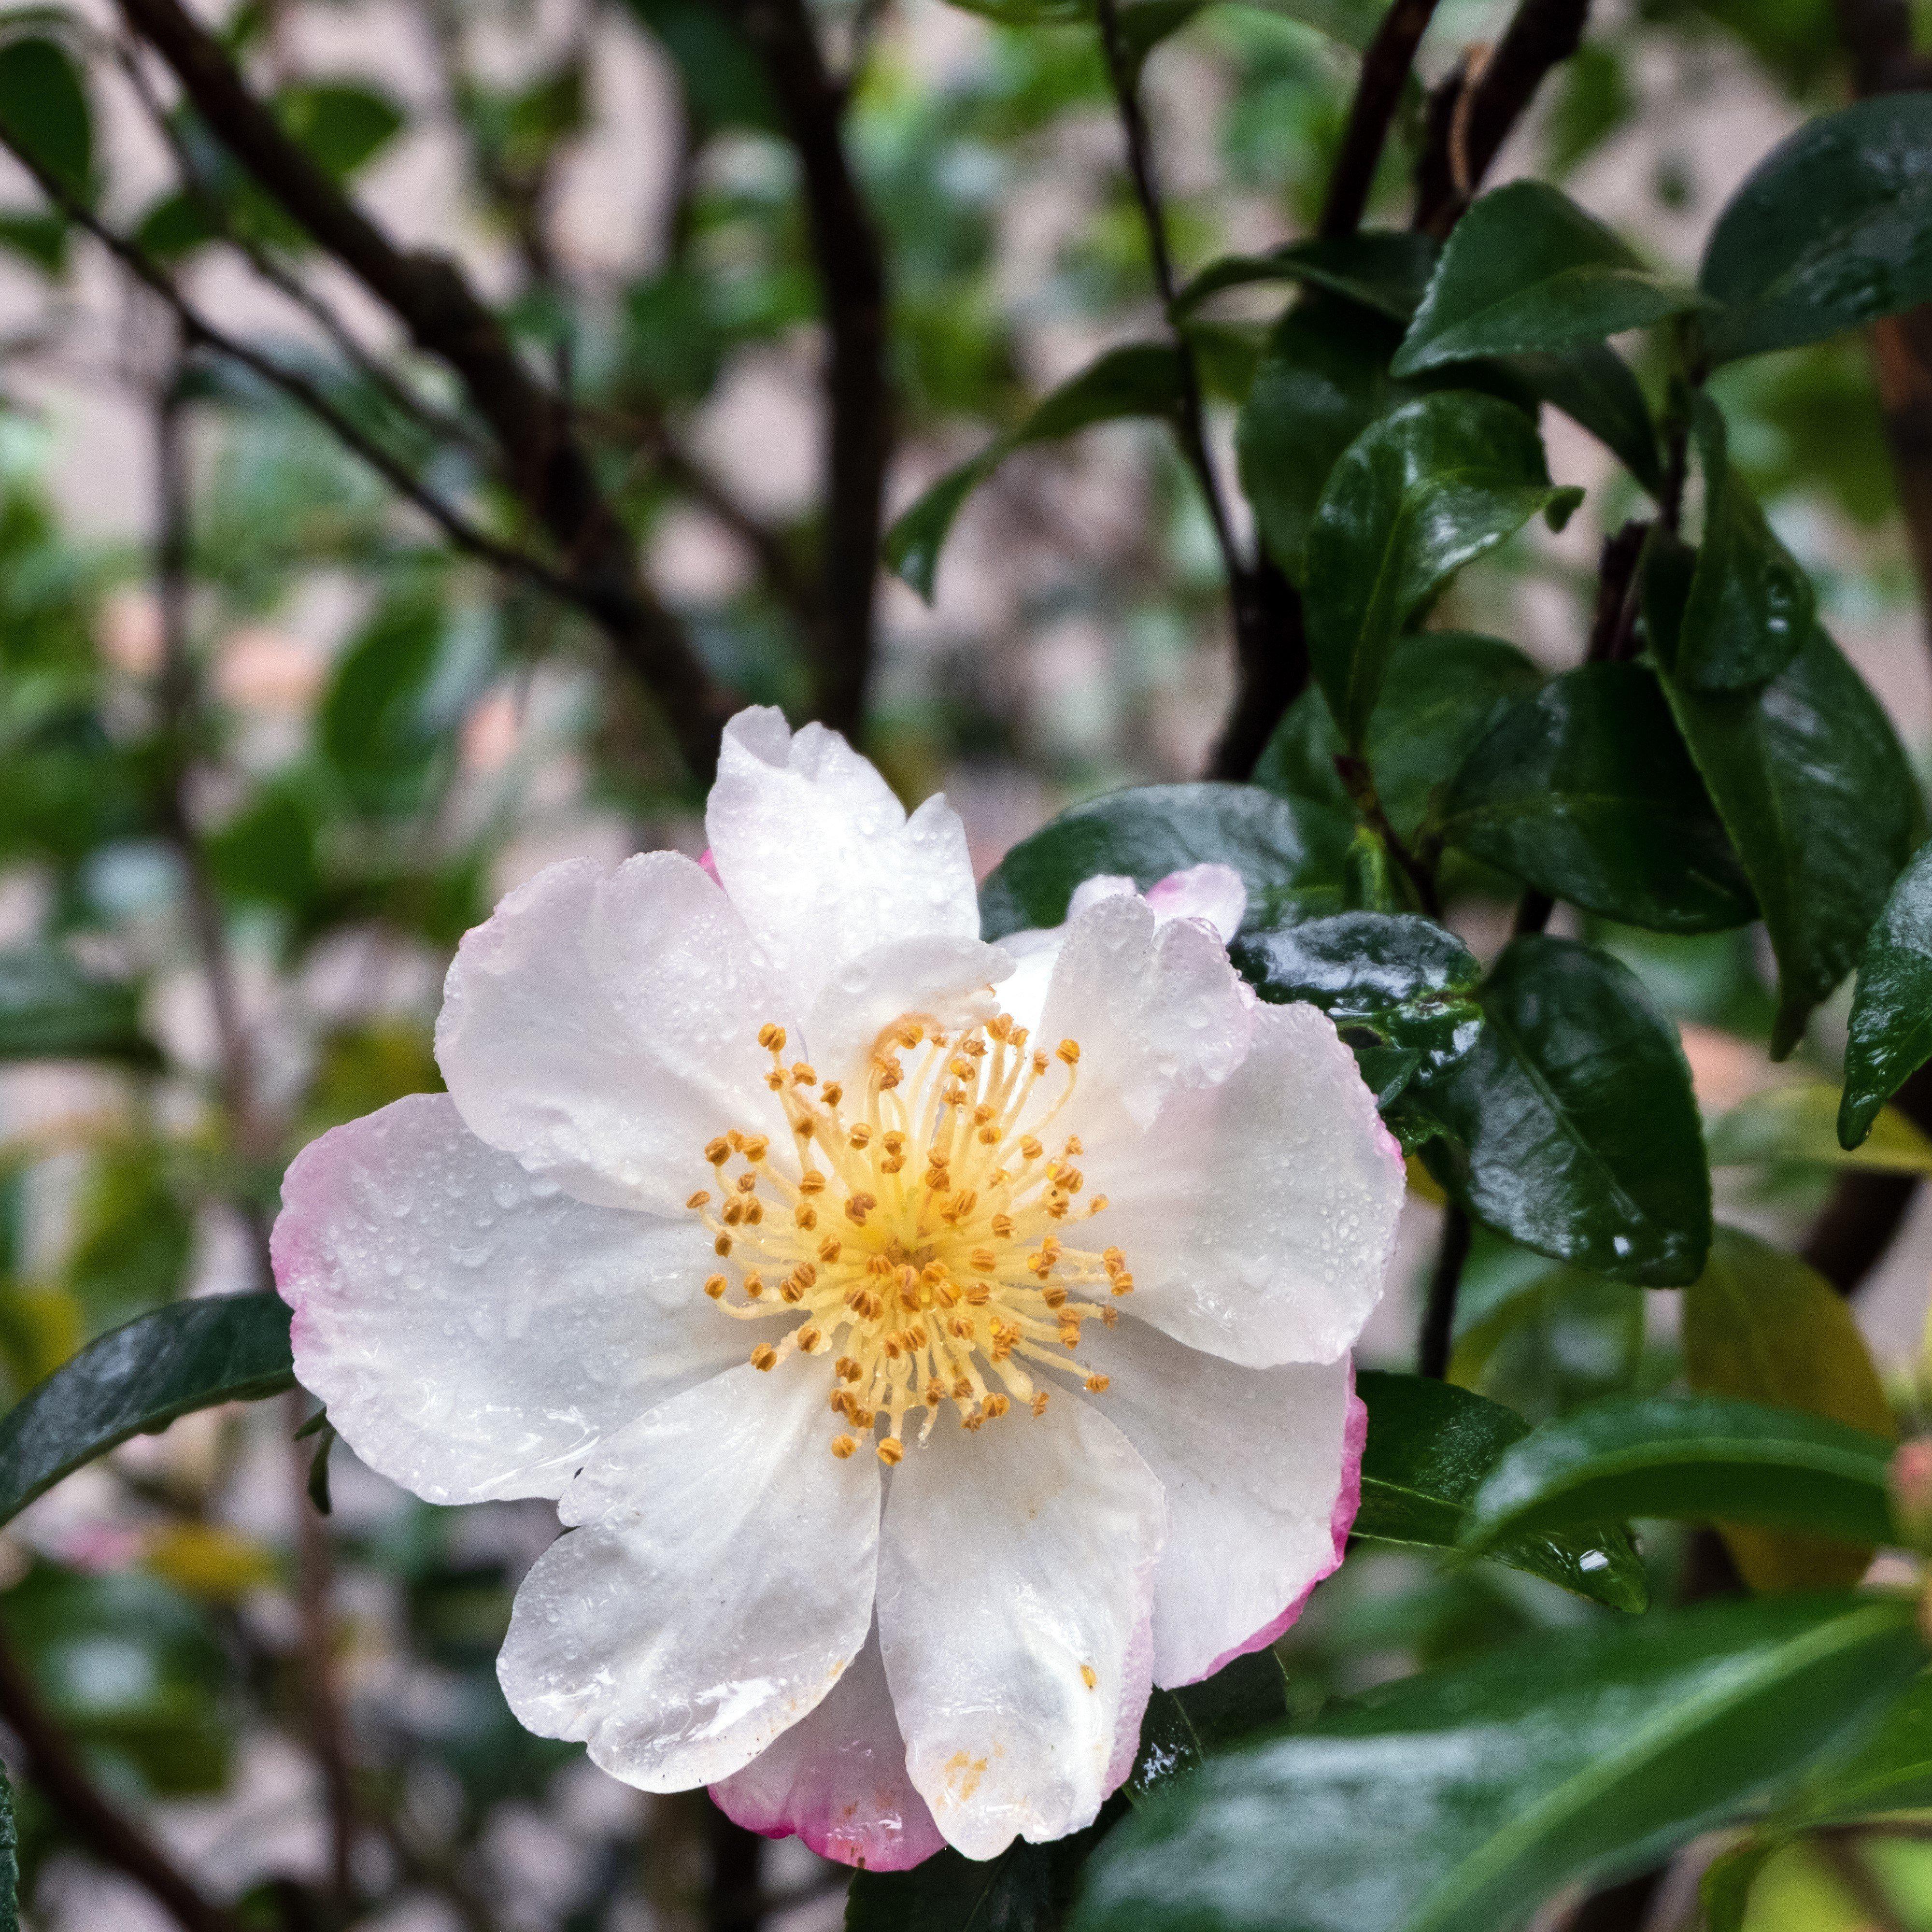 Camellia sasanqua 'Daydream' ~ Daydream Camellia